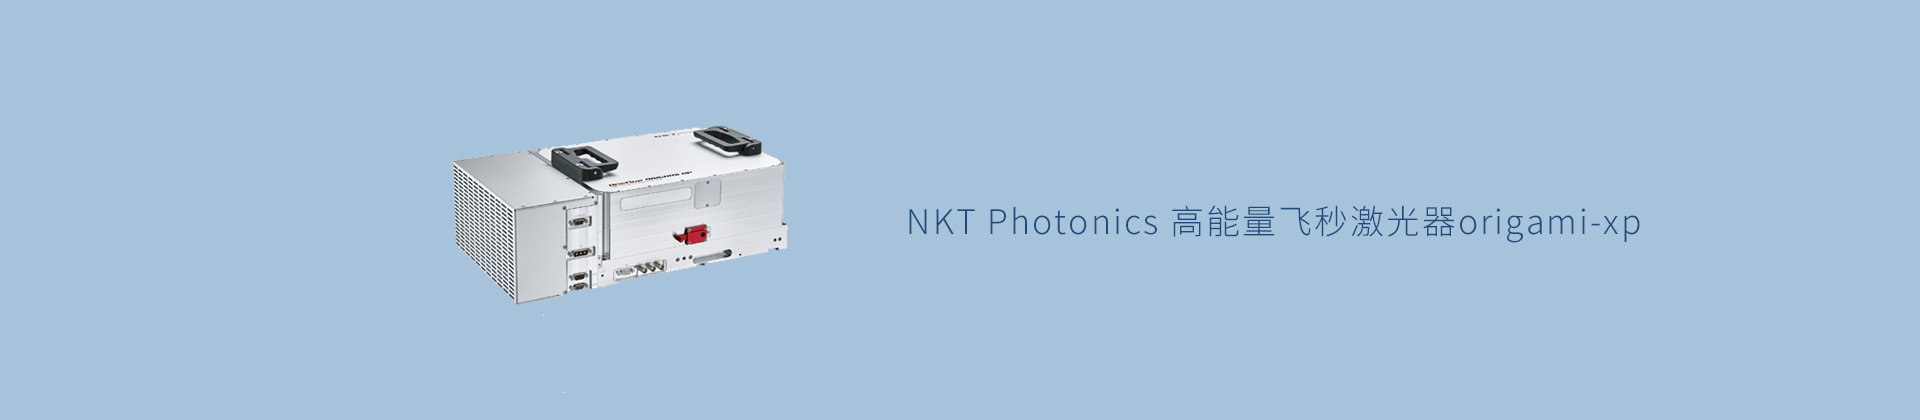 NKT Photonics 高能量飞秒激光器origami-xp